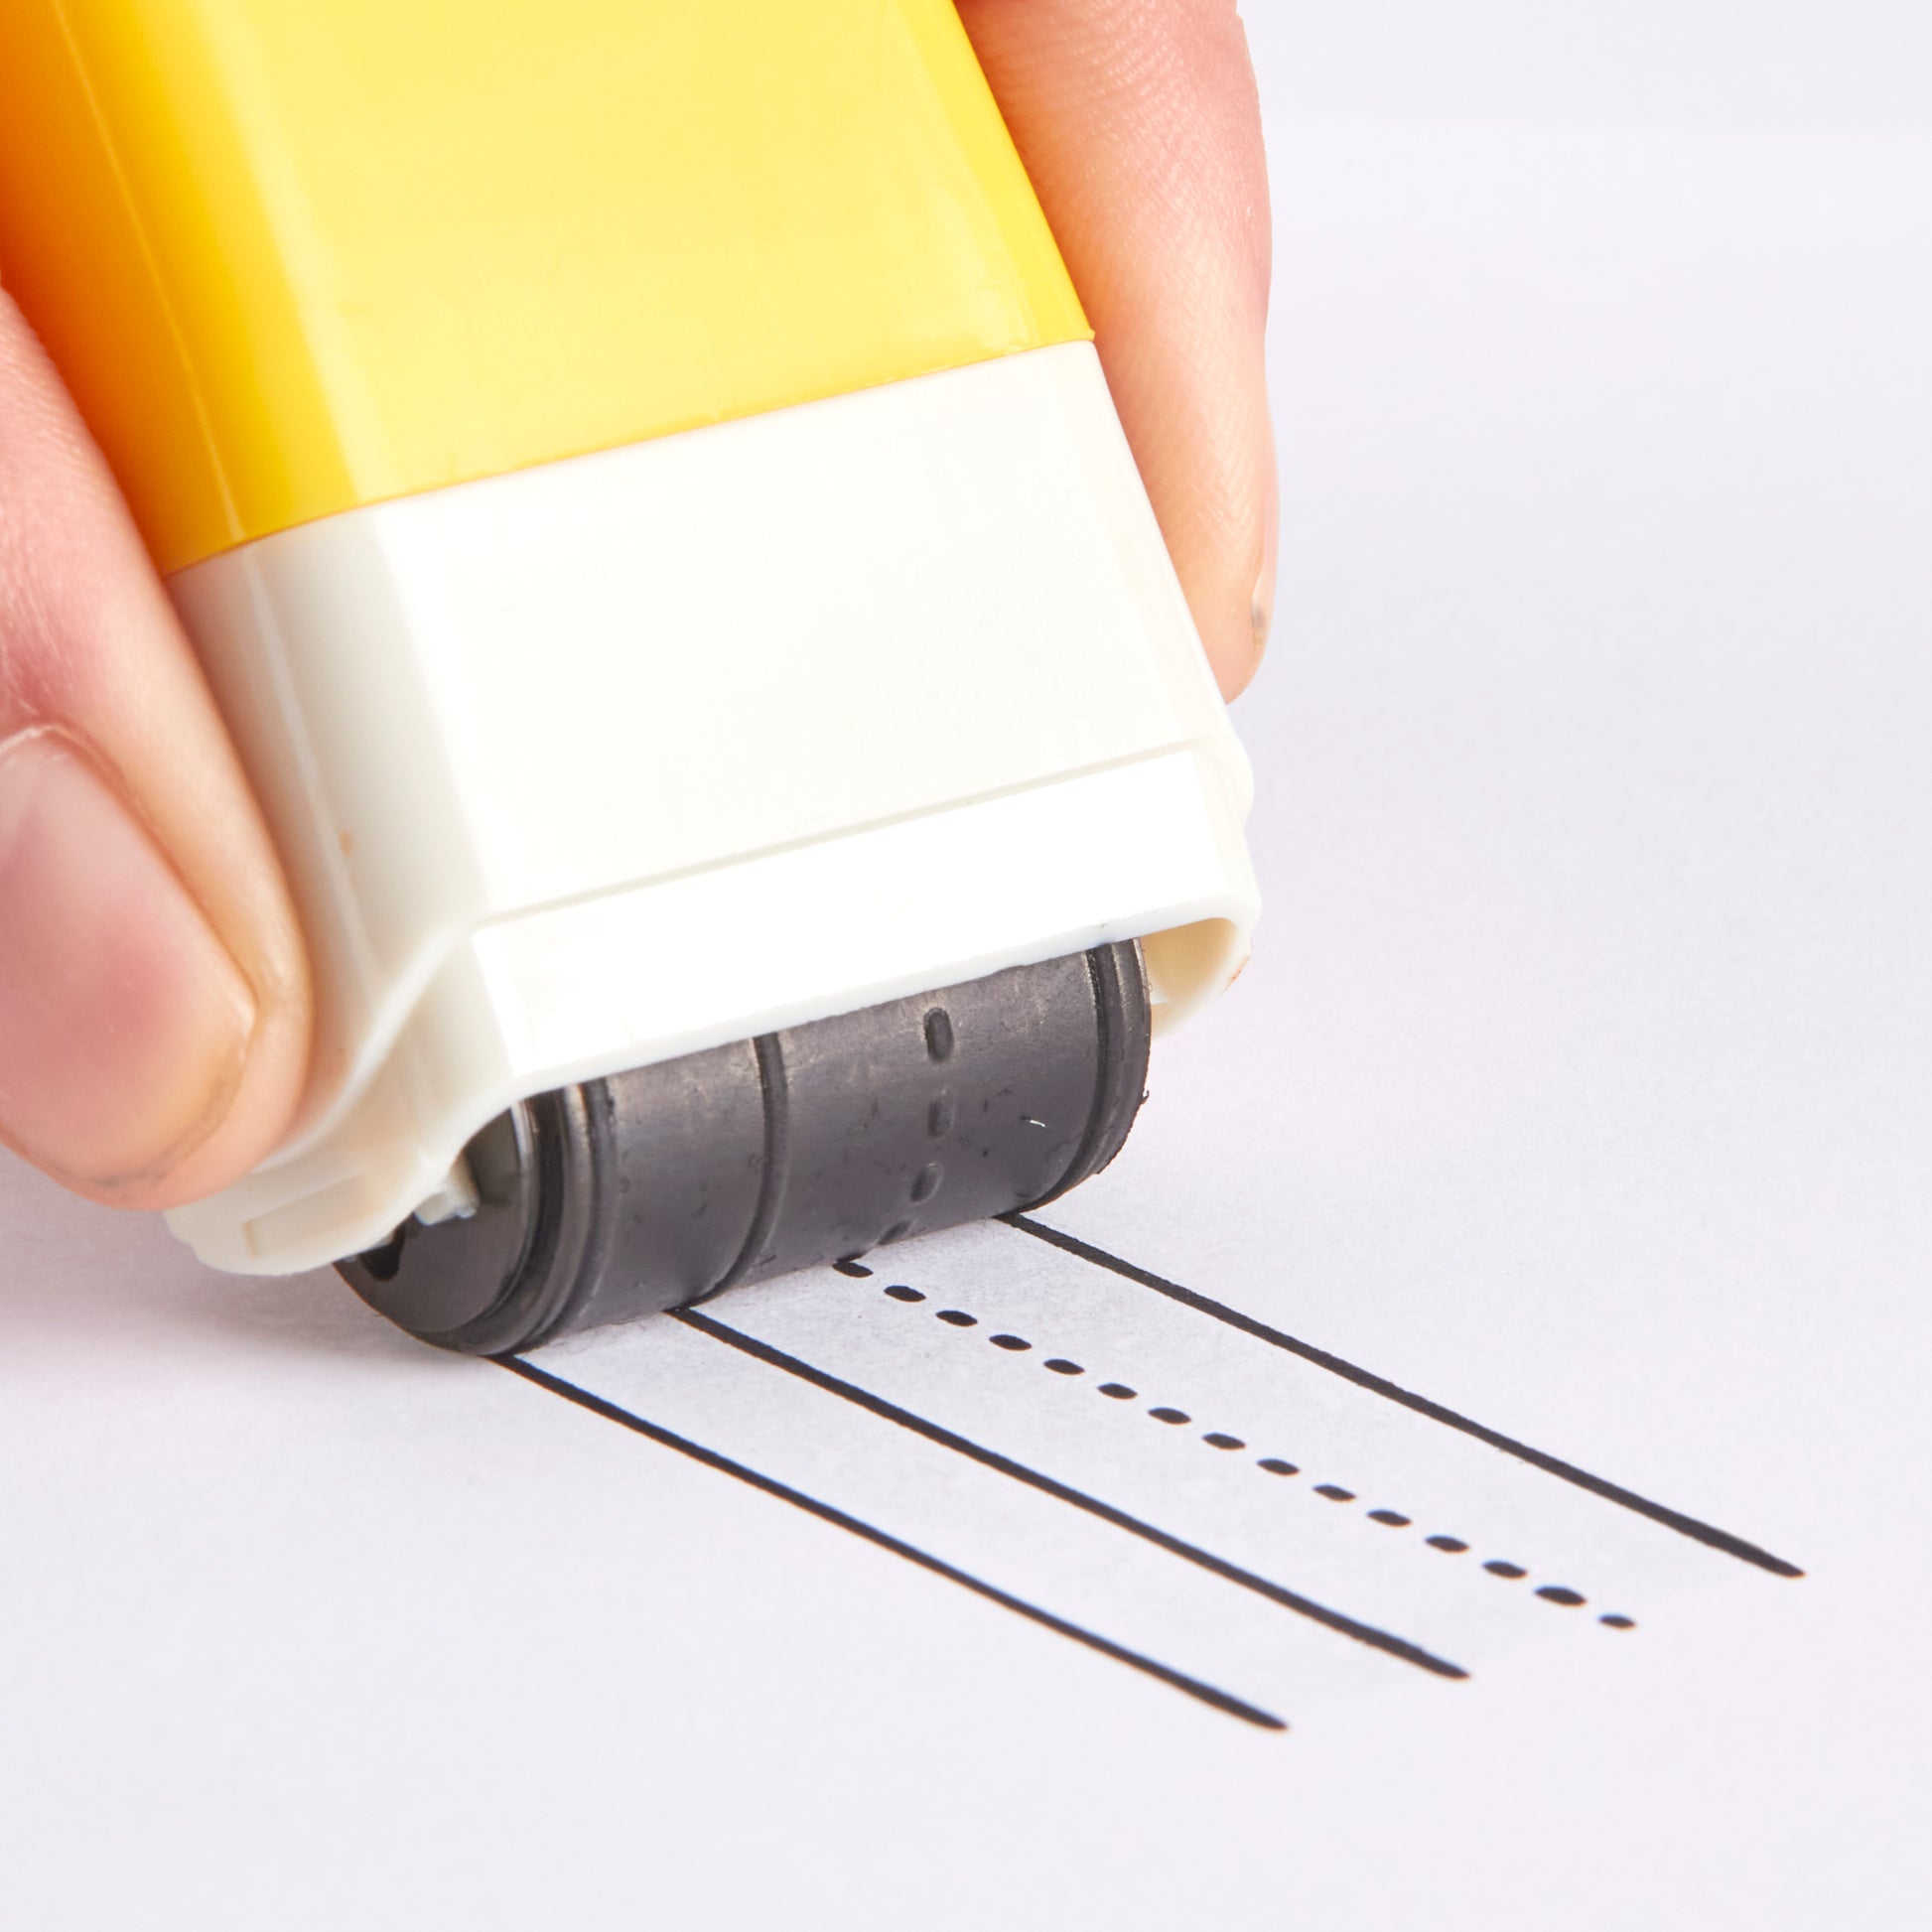 new LEGILINER 3/4” 18mm Handwriting Line Rolling Self-Inking Stamp